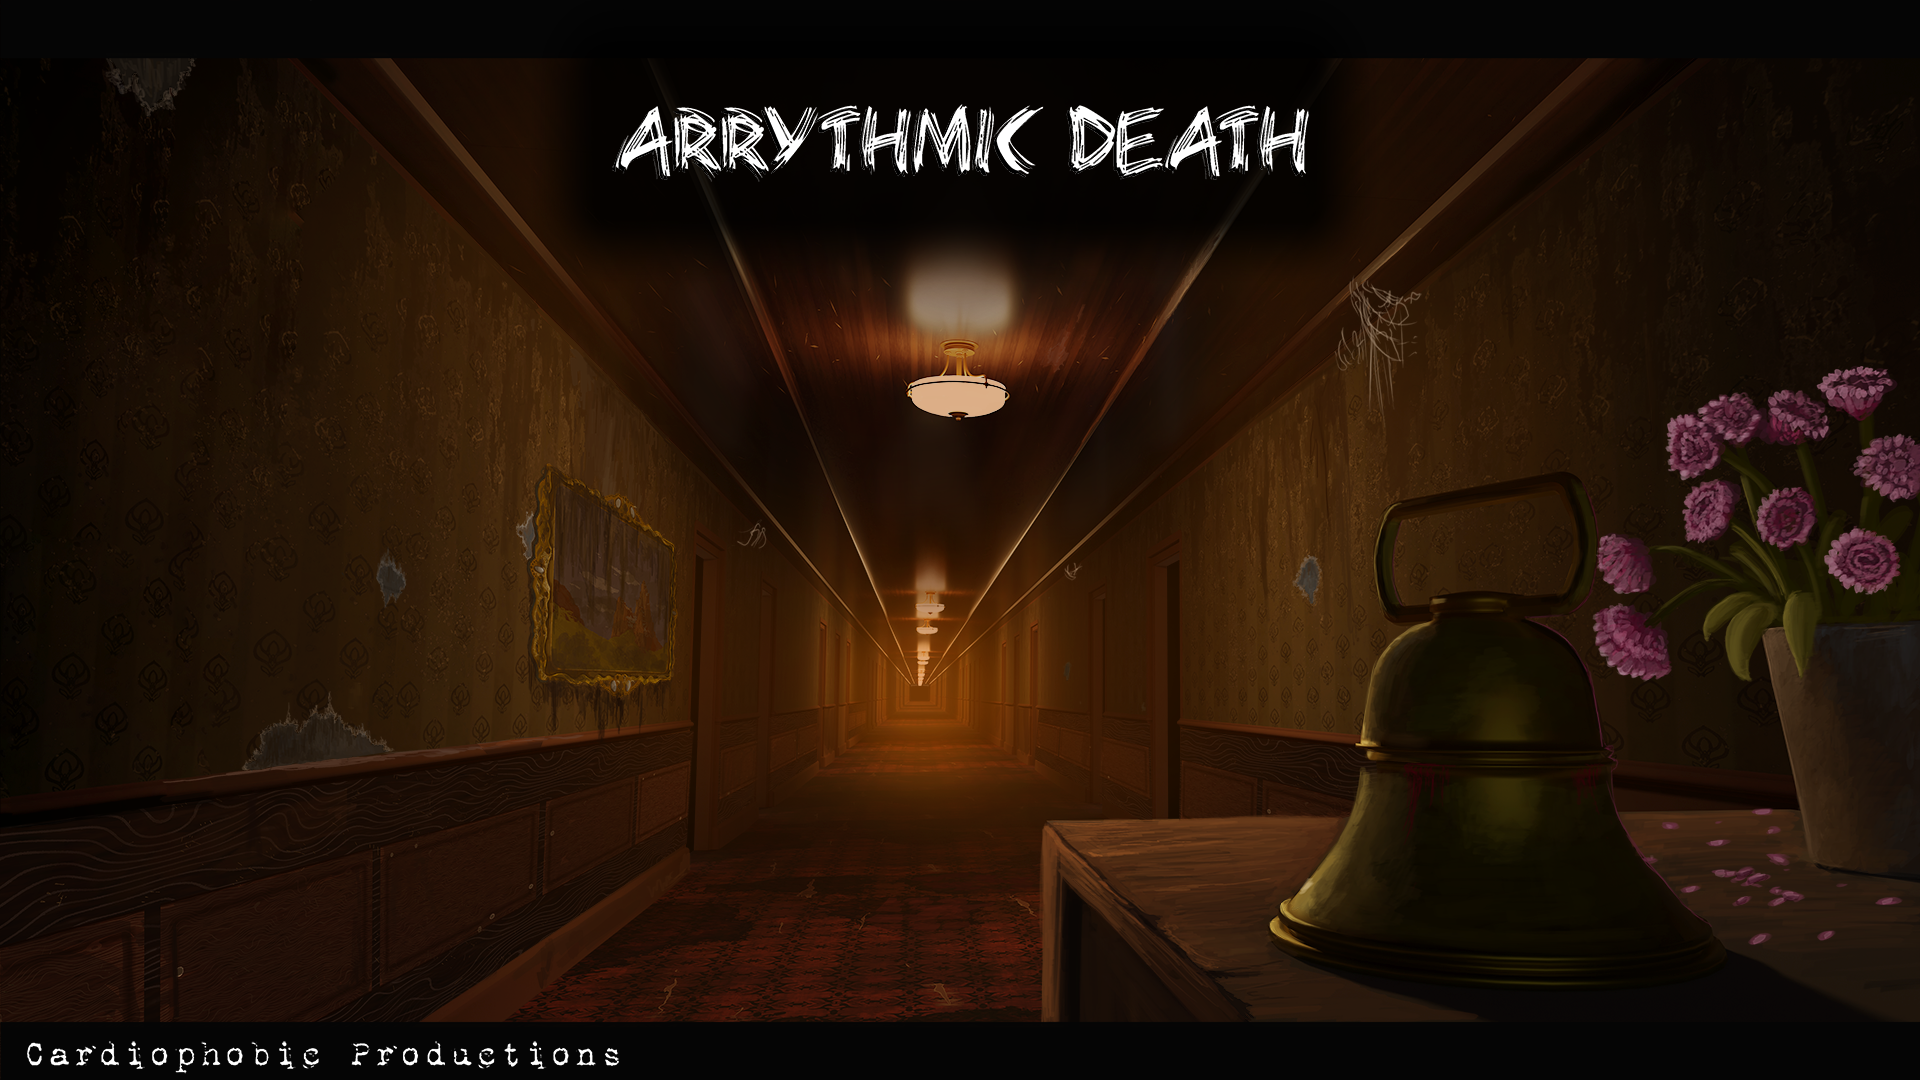 Arrythmic Death